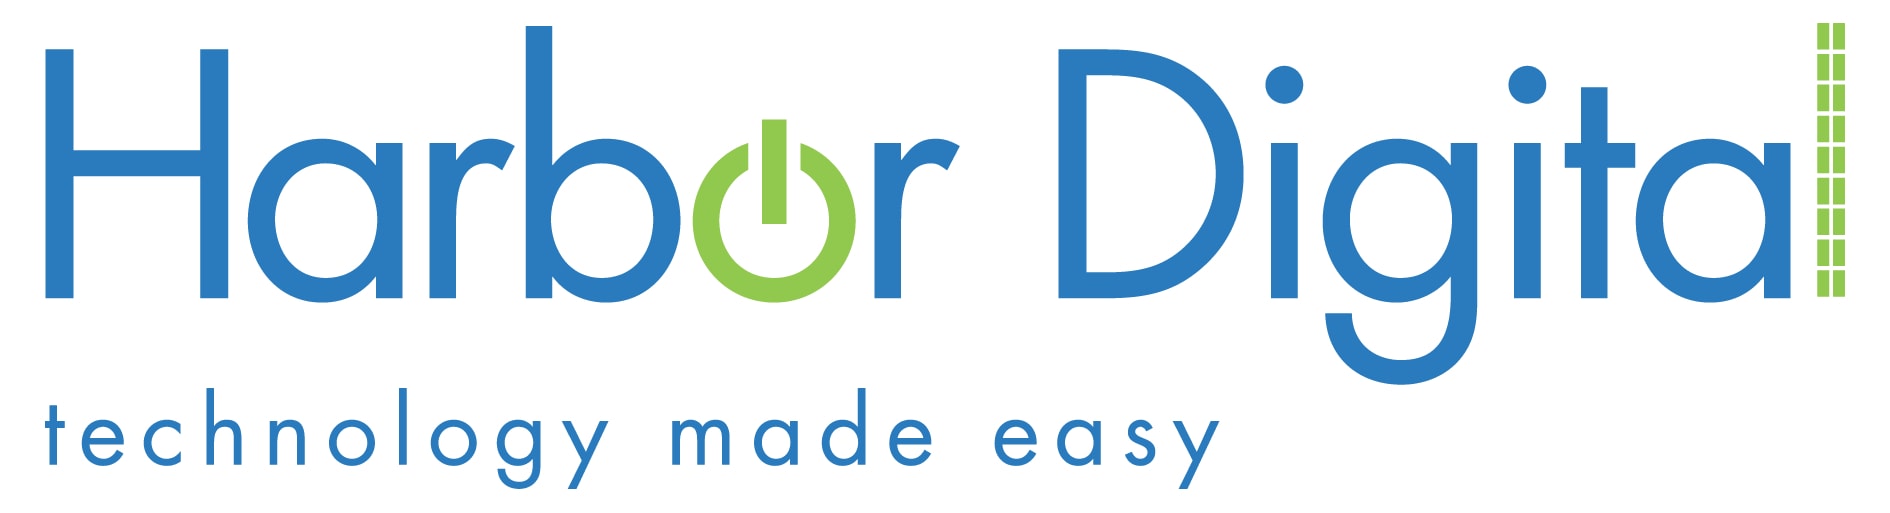 Harbor Digital Logo_2016